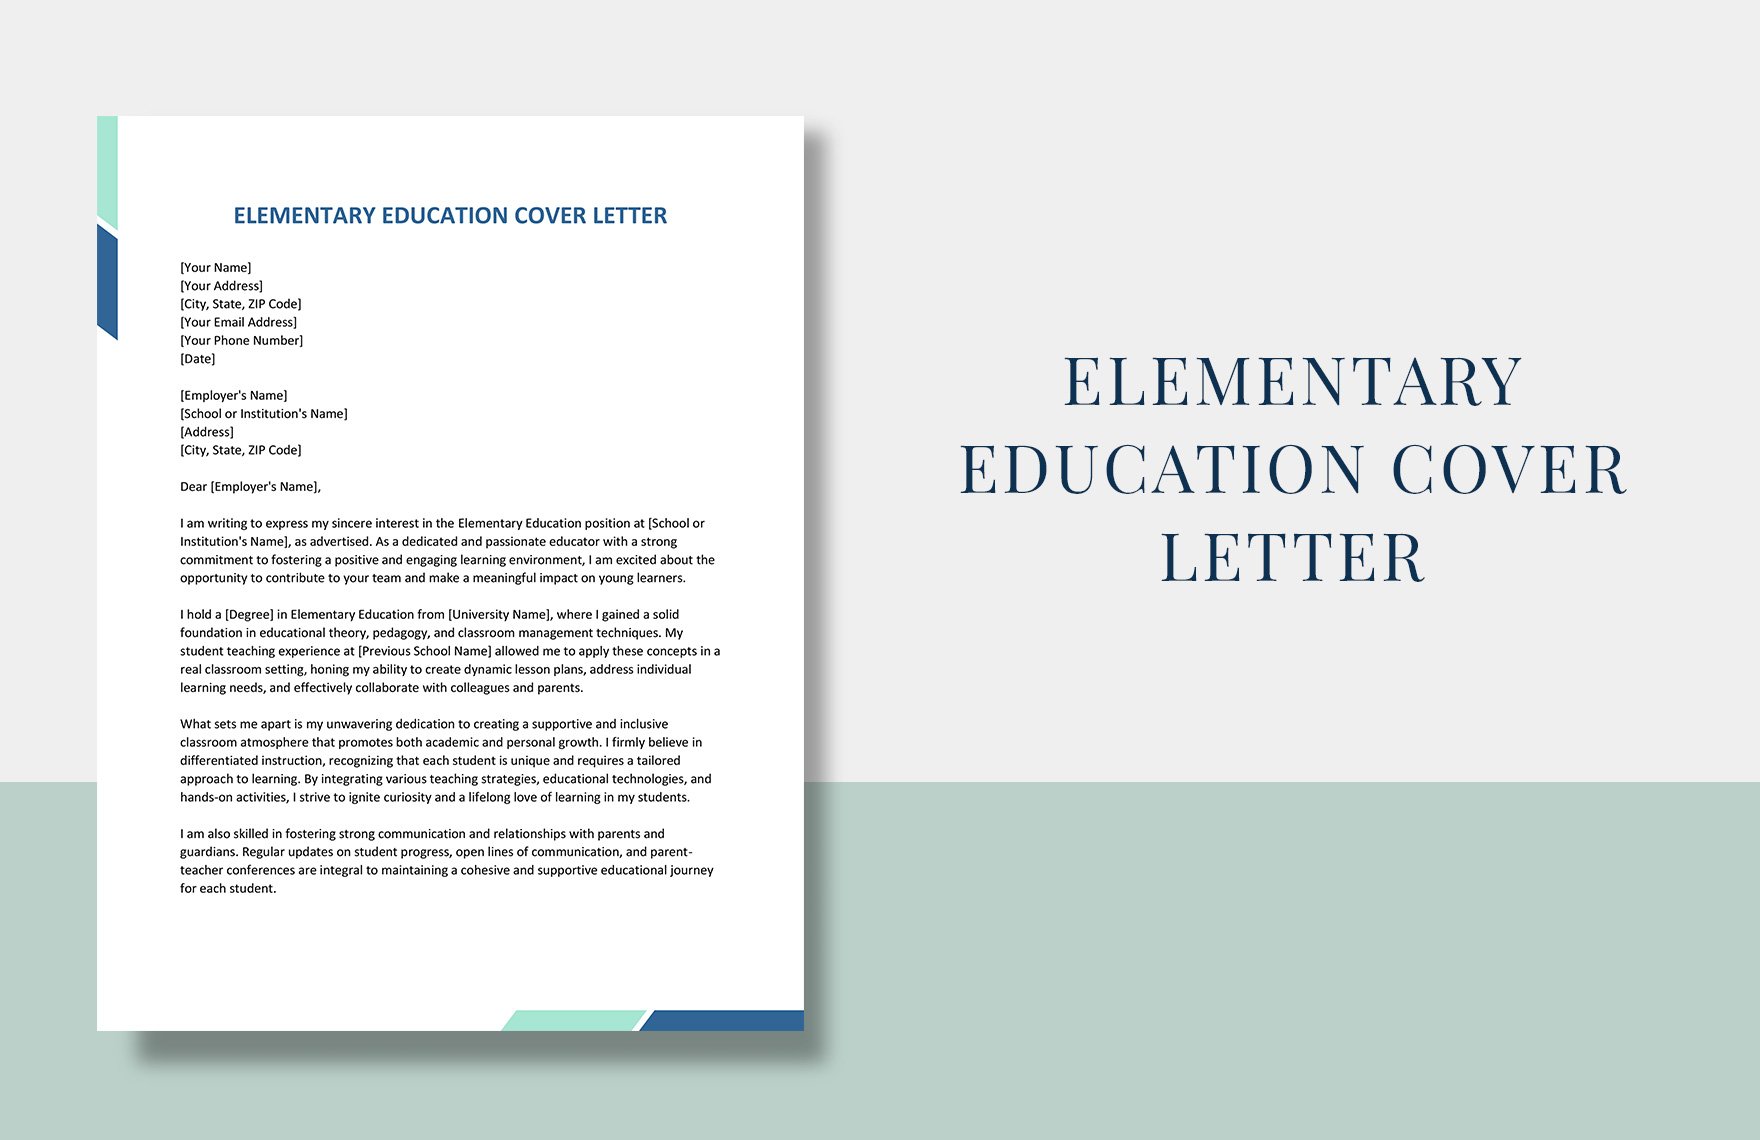 Elementary Education Cover Letter